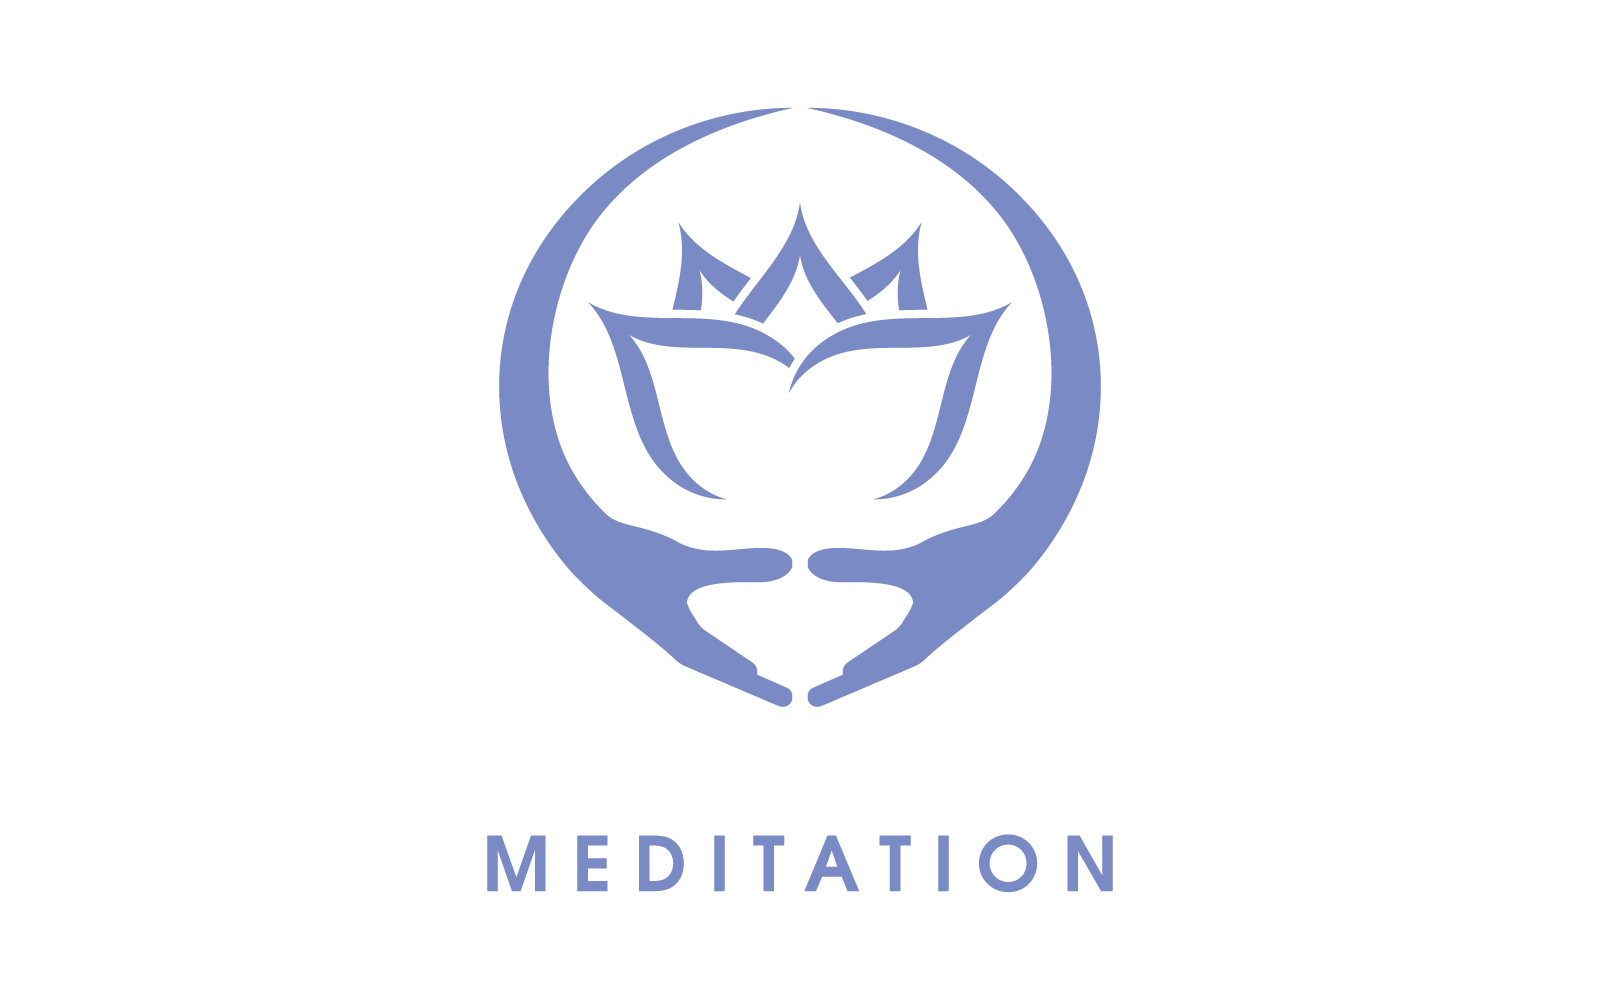 Meditation yoga logo illustration template vector icon design